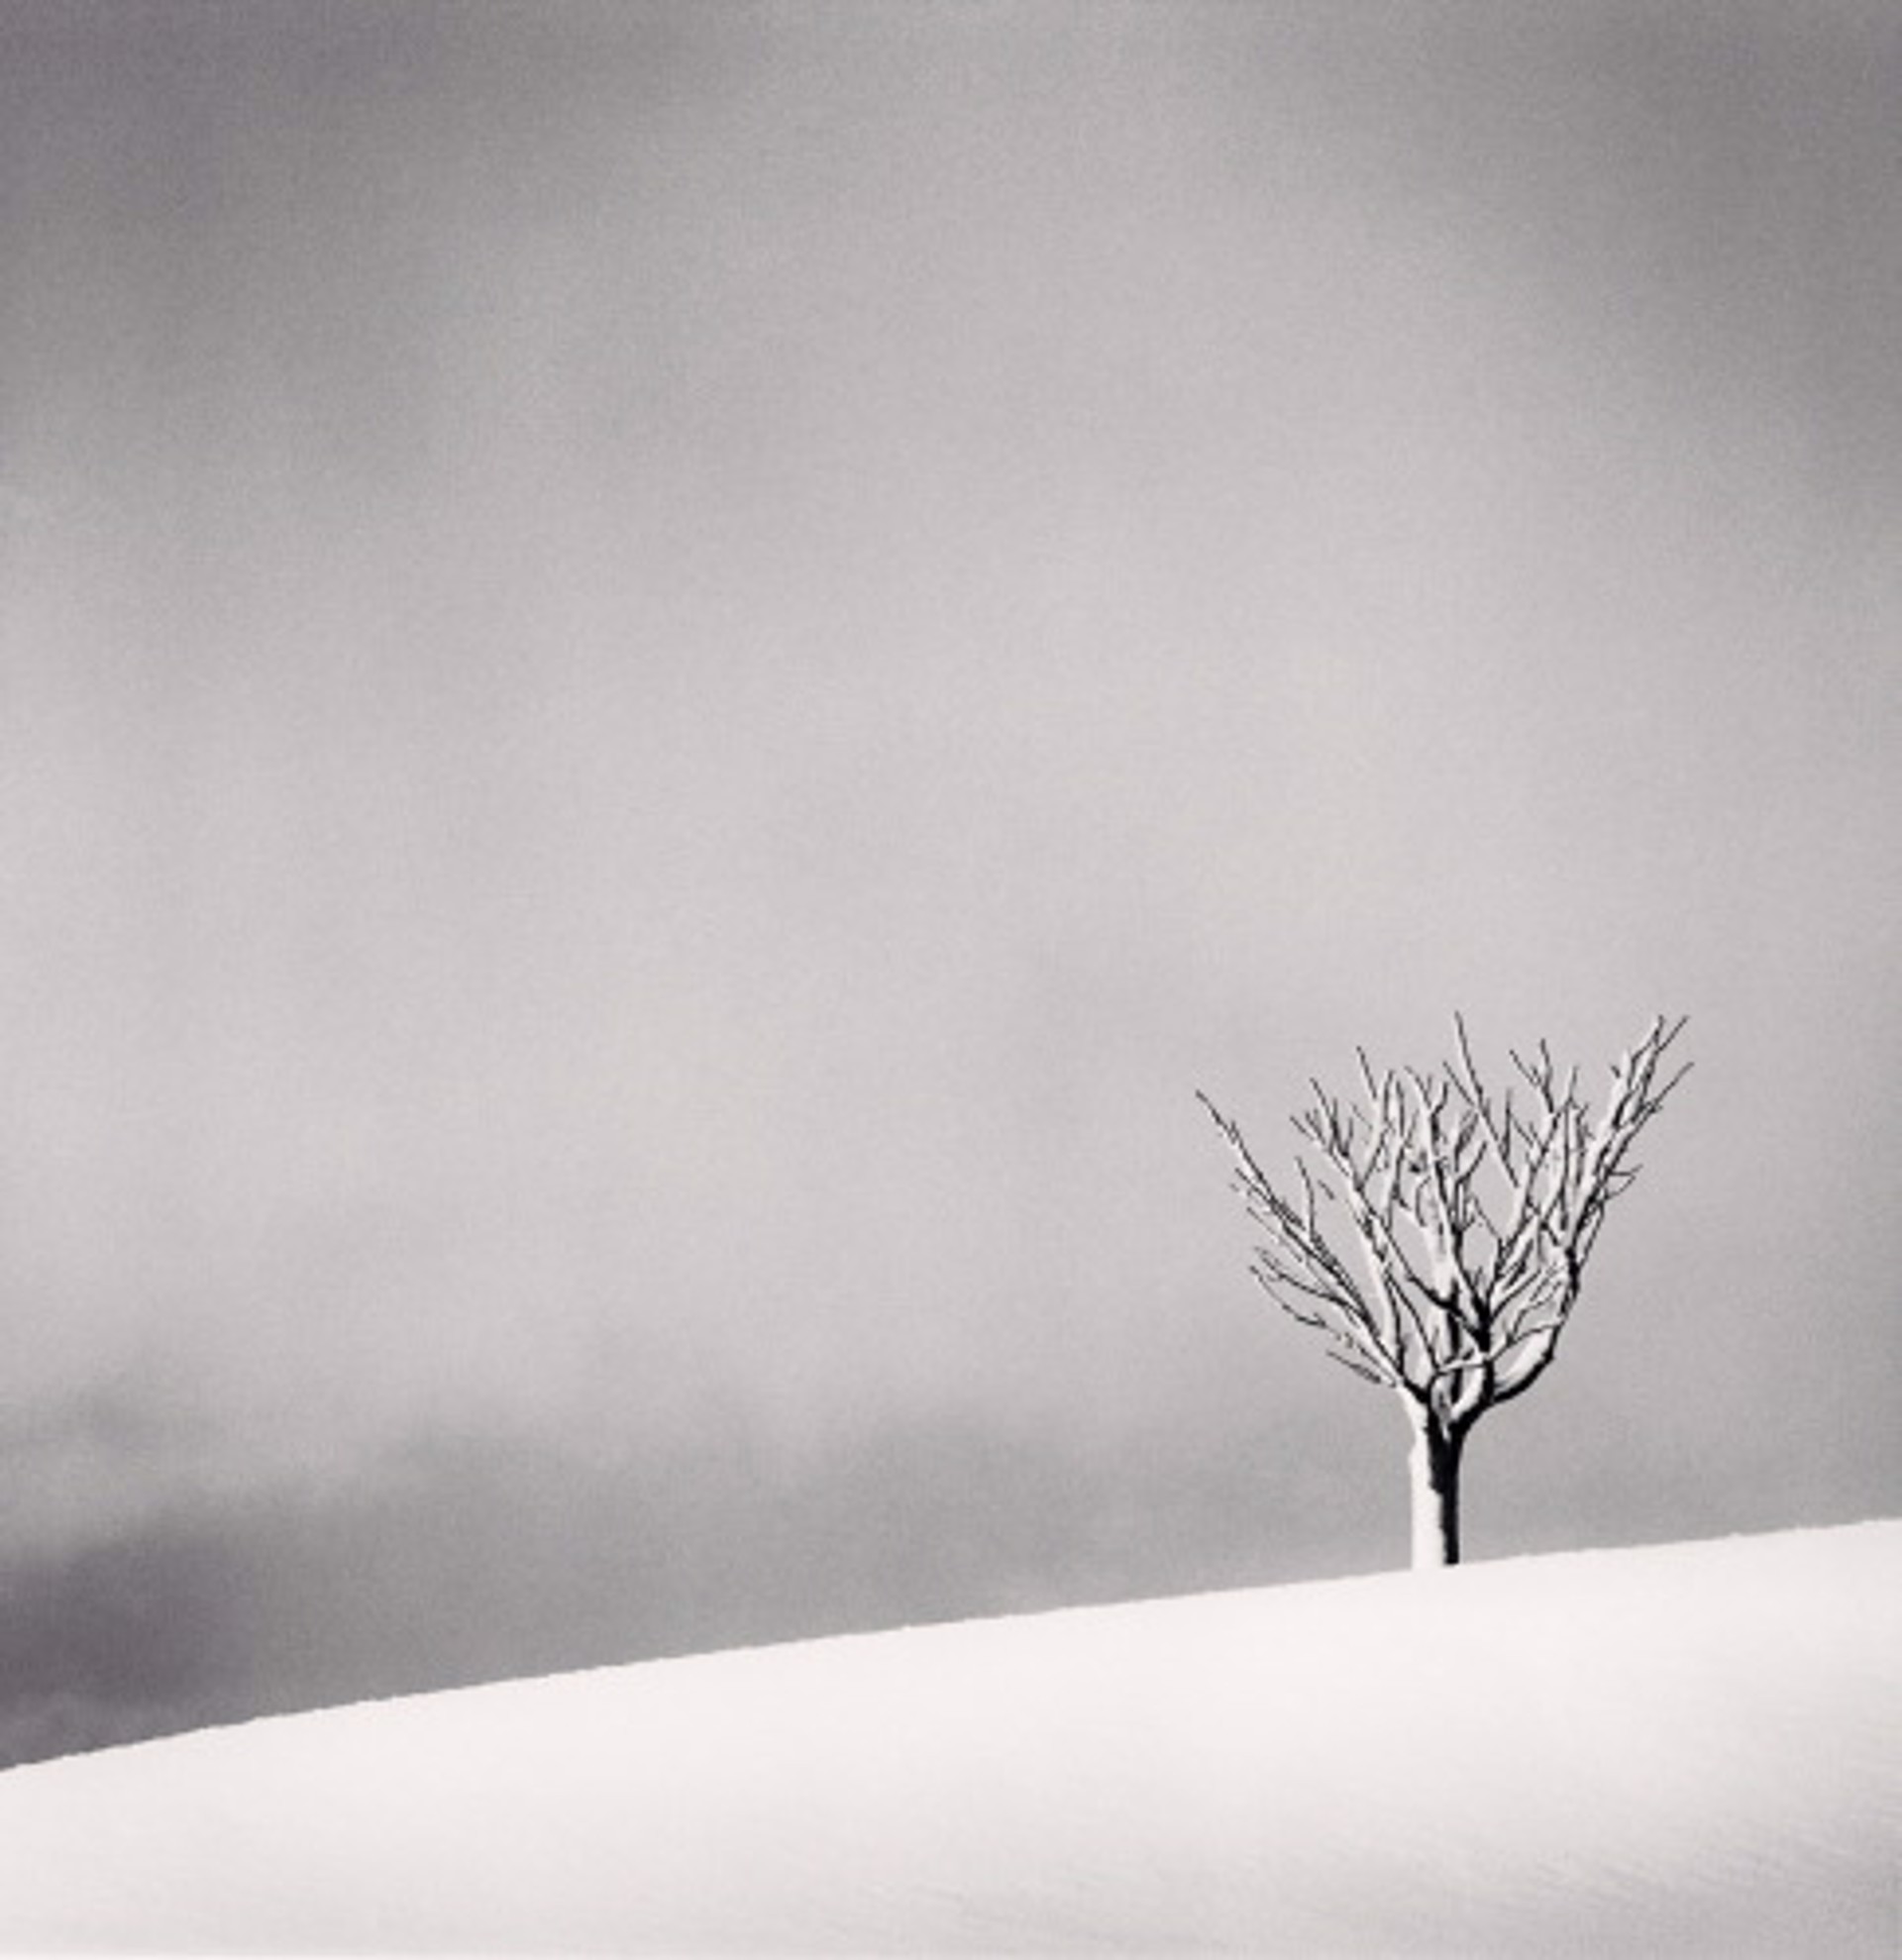 Snowfall, Numakawa, Hokkaido, Japan (edition of 45) by Michael Kenna